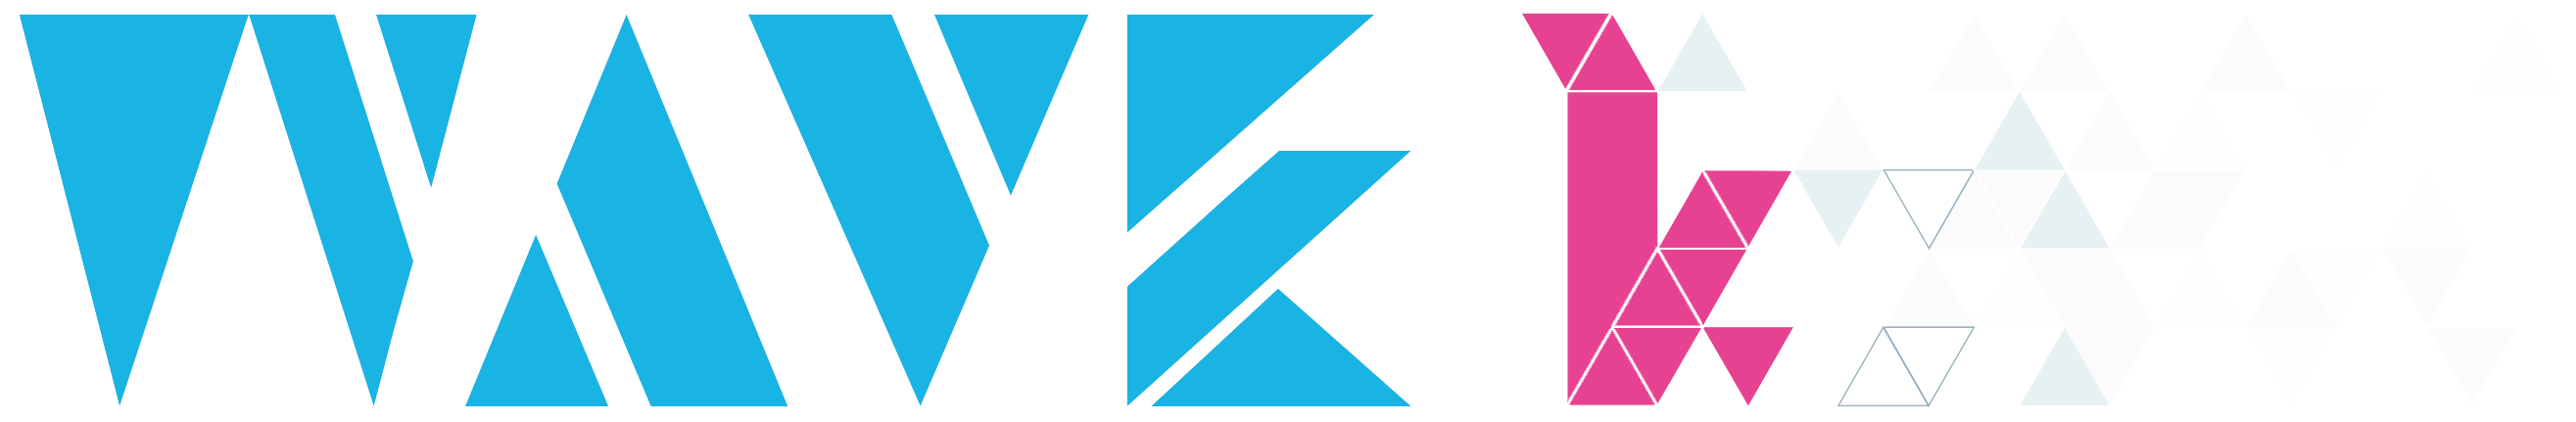 WAVE KTV - Up To 62% Off - Flushing, NY